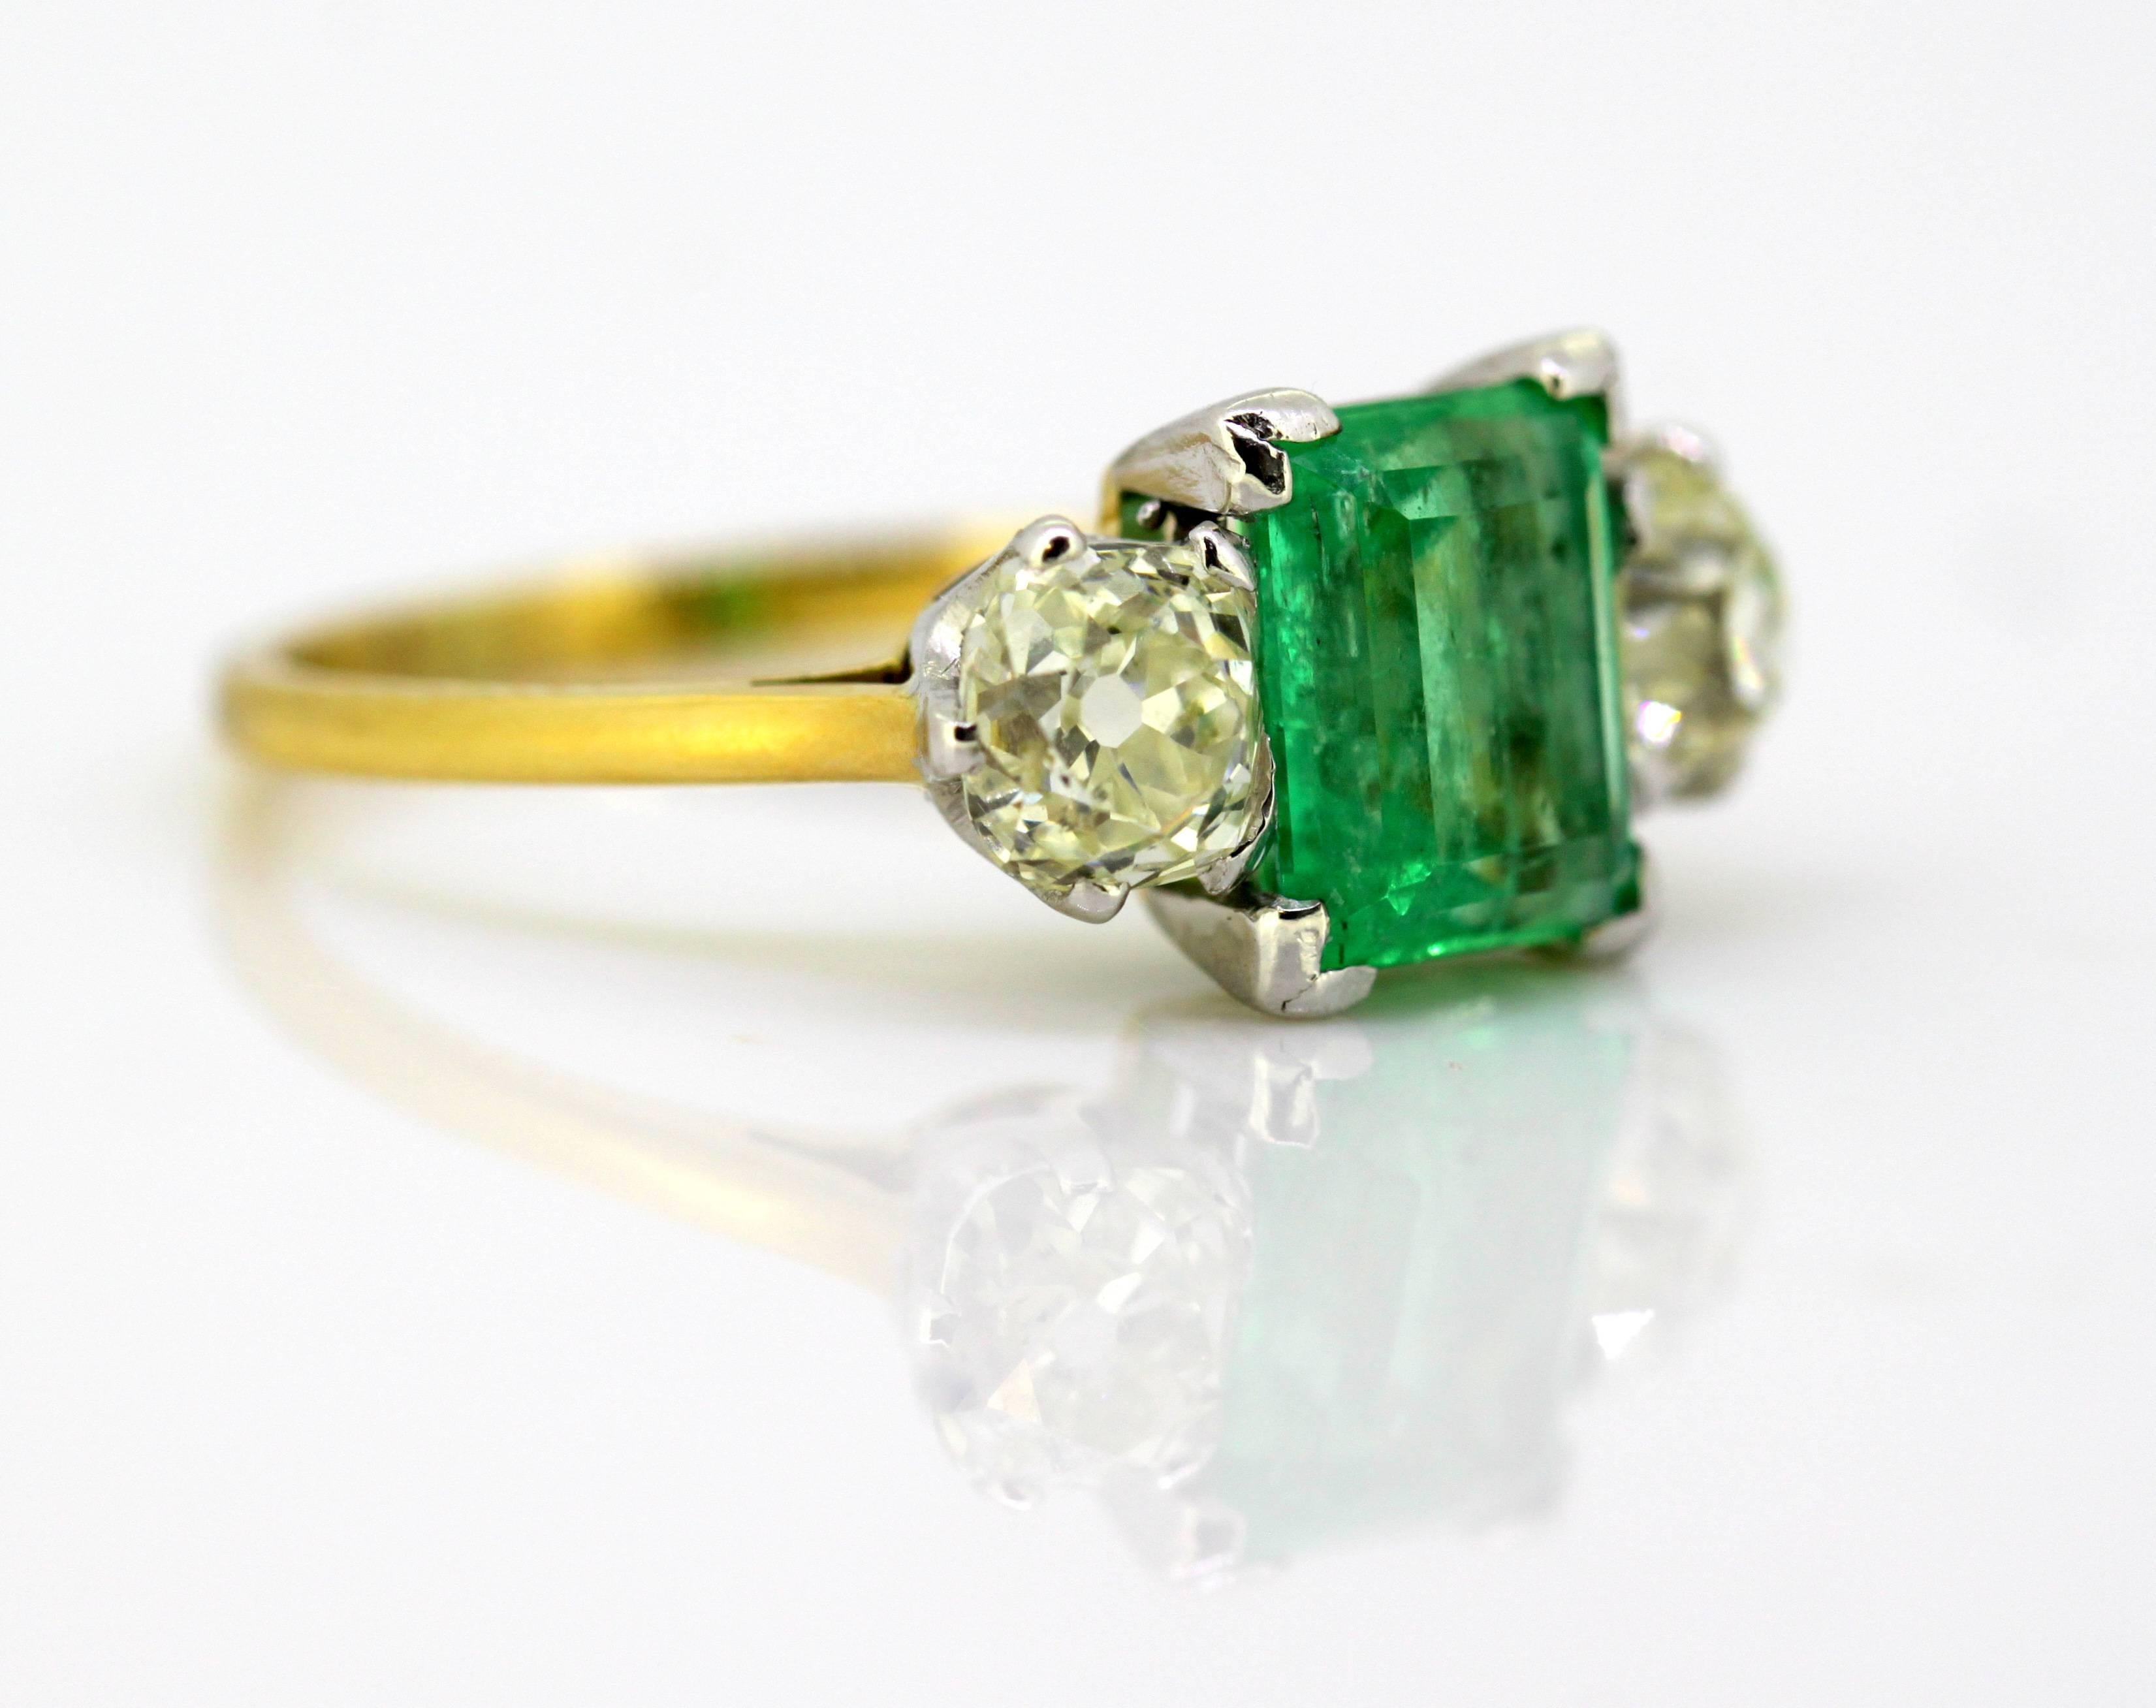 Art Deco 18K Gold Three Stone Ladies Ring With Emerald & Diamonds
Circa.1920's

Dimensions -
Finger Size: (UK) = M (US) = 6 1/2 (EU) = 52 1/2
Weight: 4 g
Ring Size : 2.4 x 2 x 0.9 cm

Emerald - 
Cut : Emerald
Size : 1 CT
Treatment : Natural

Diamond